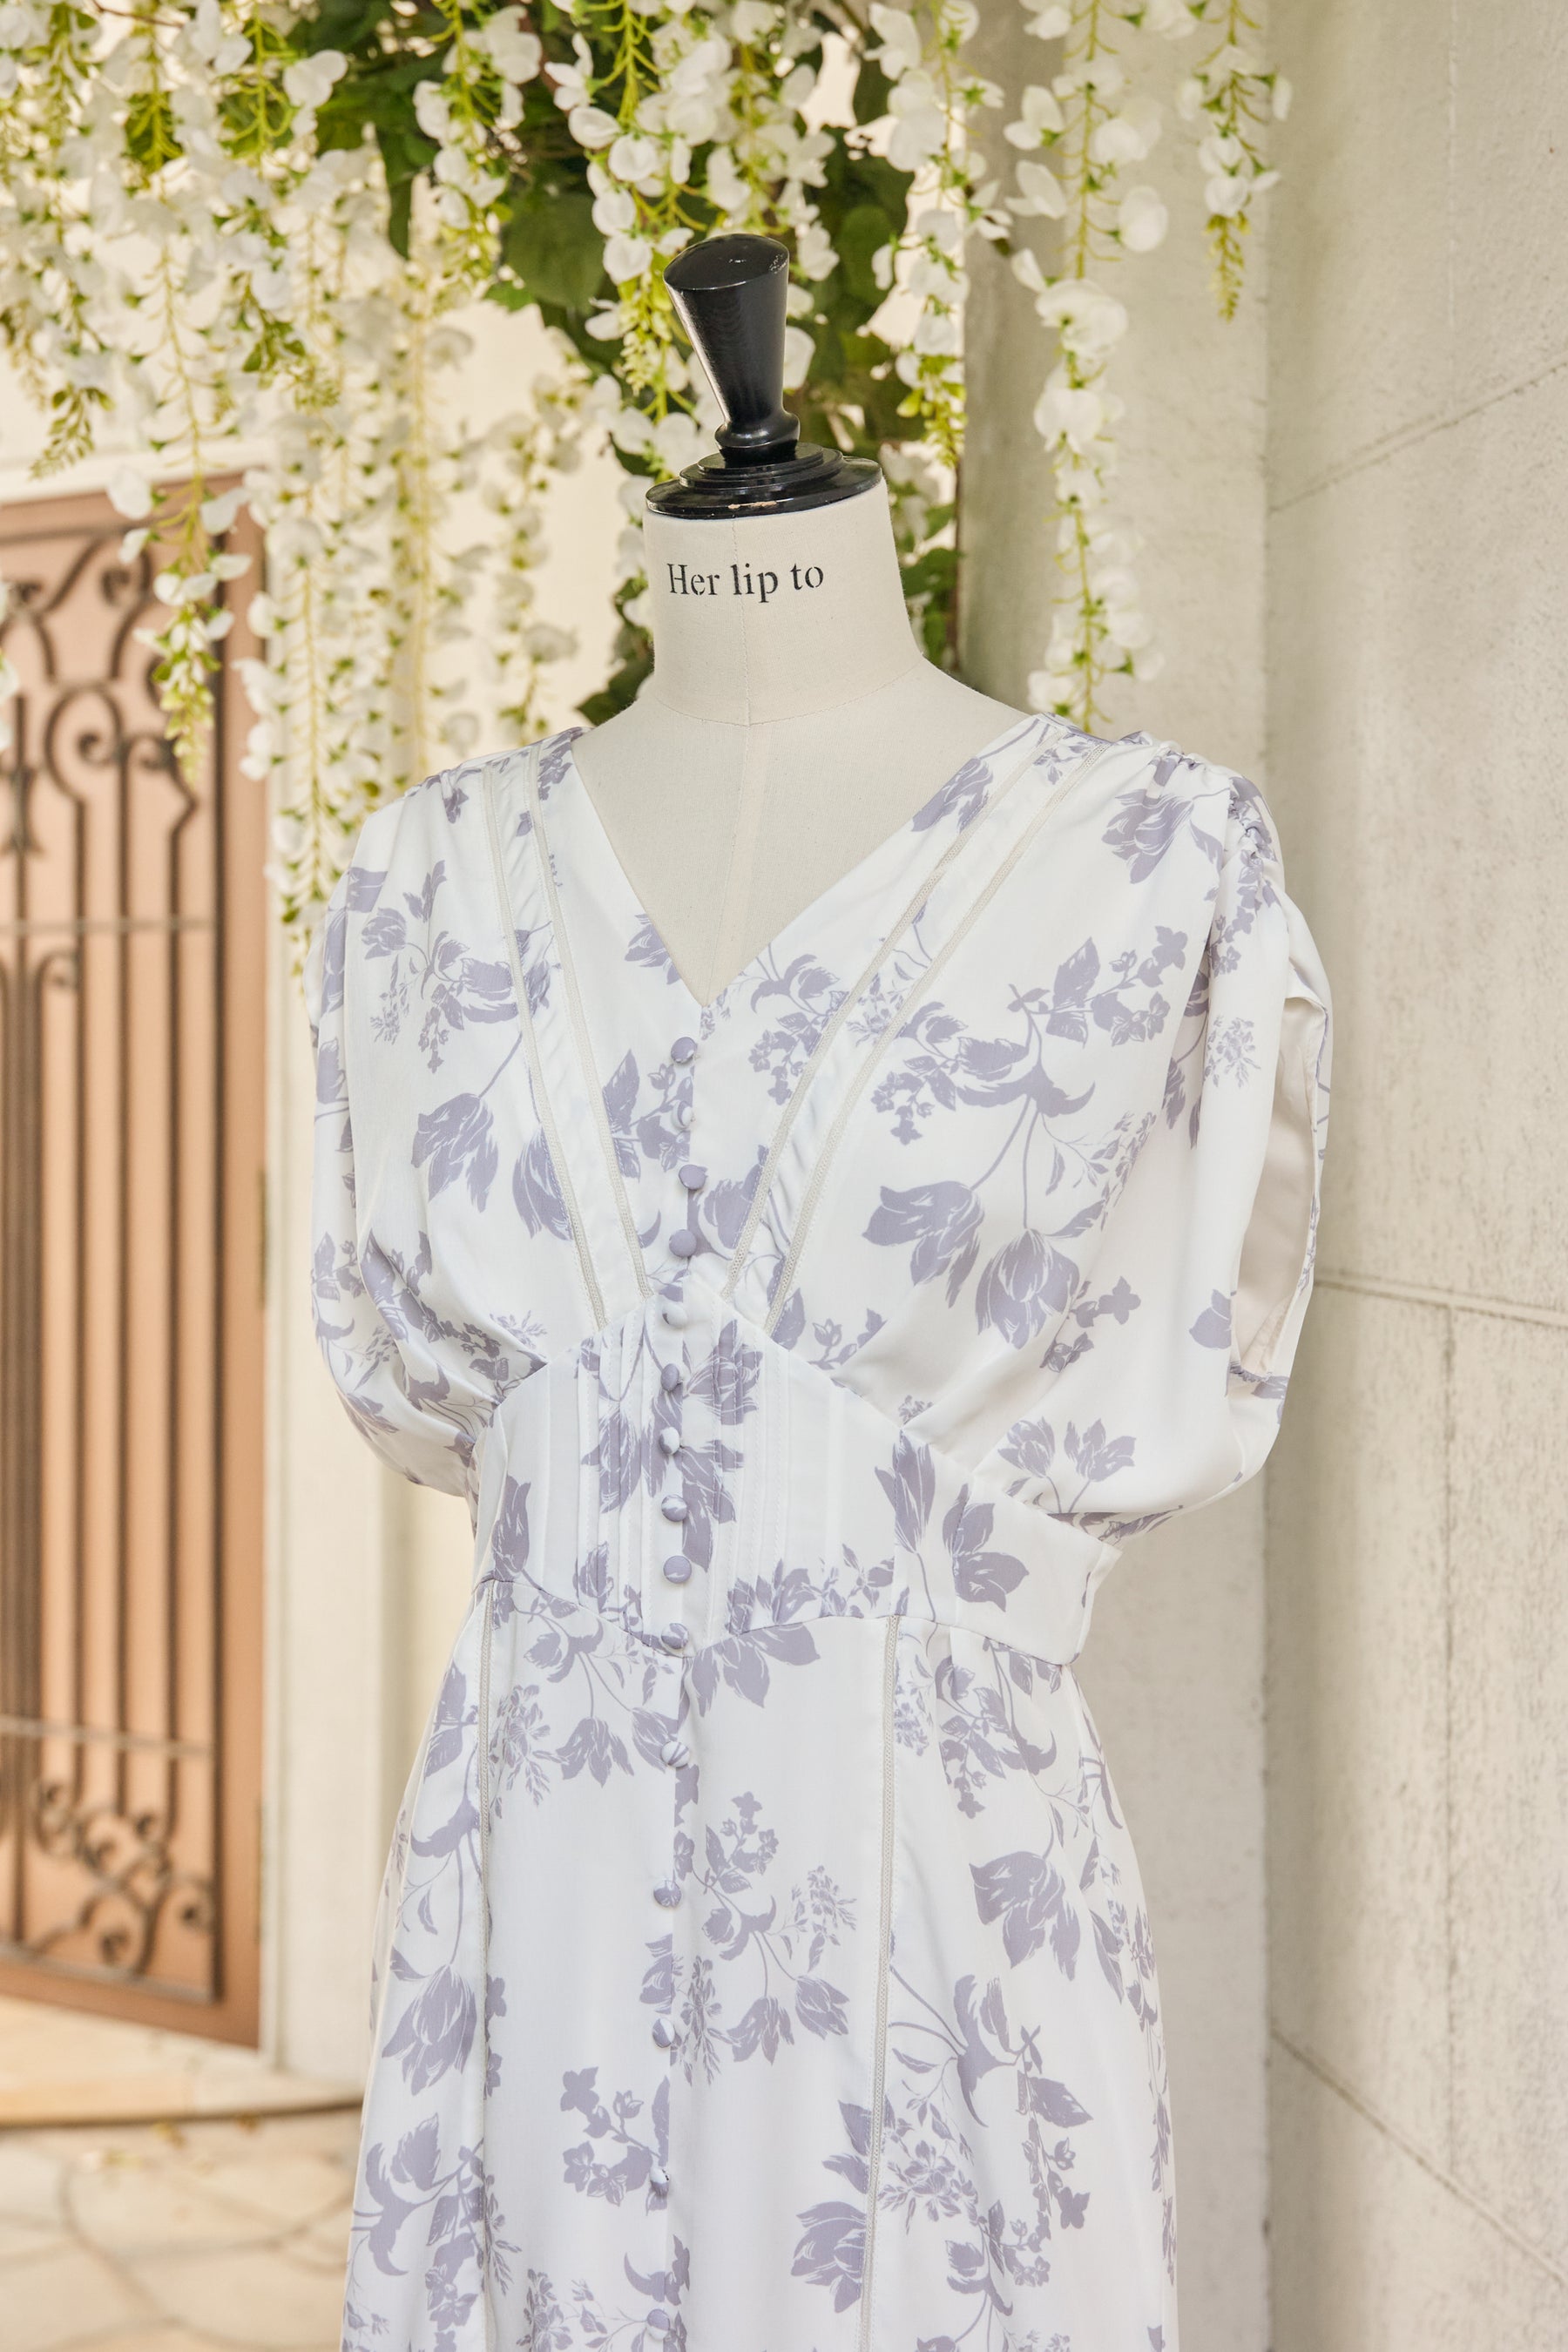 herlipto Royal Garden Floral Dress Mサイズ - www ...